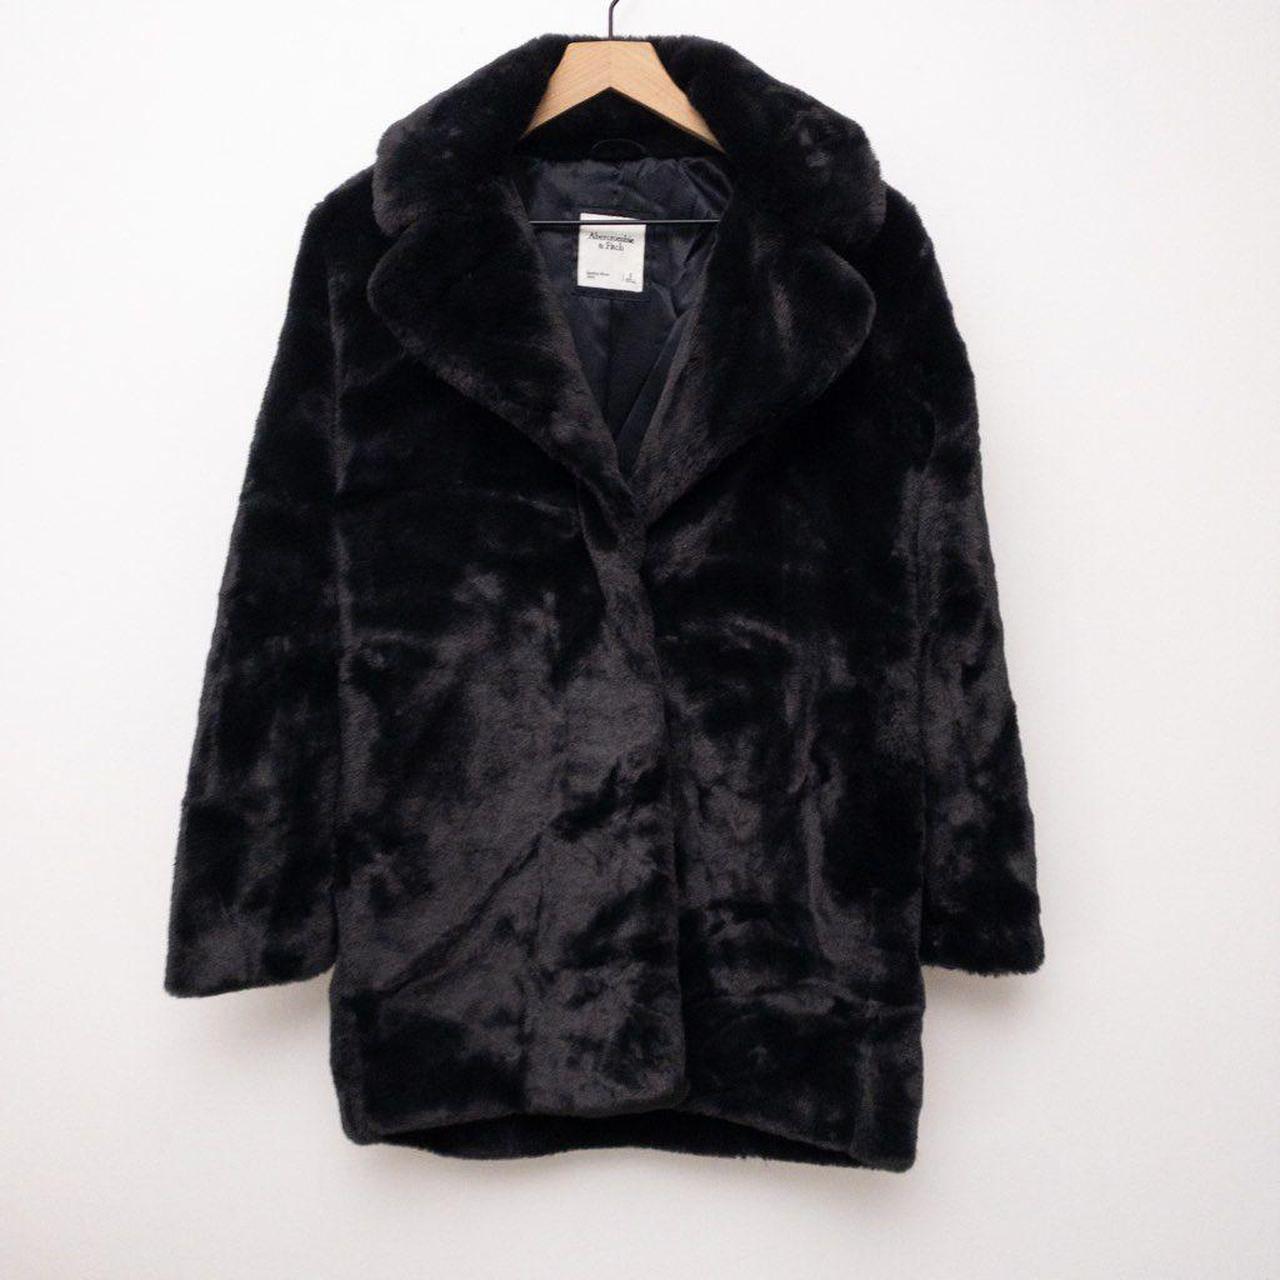 Abercrombie & Fitch Women's Black Coat